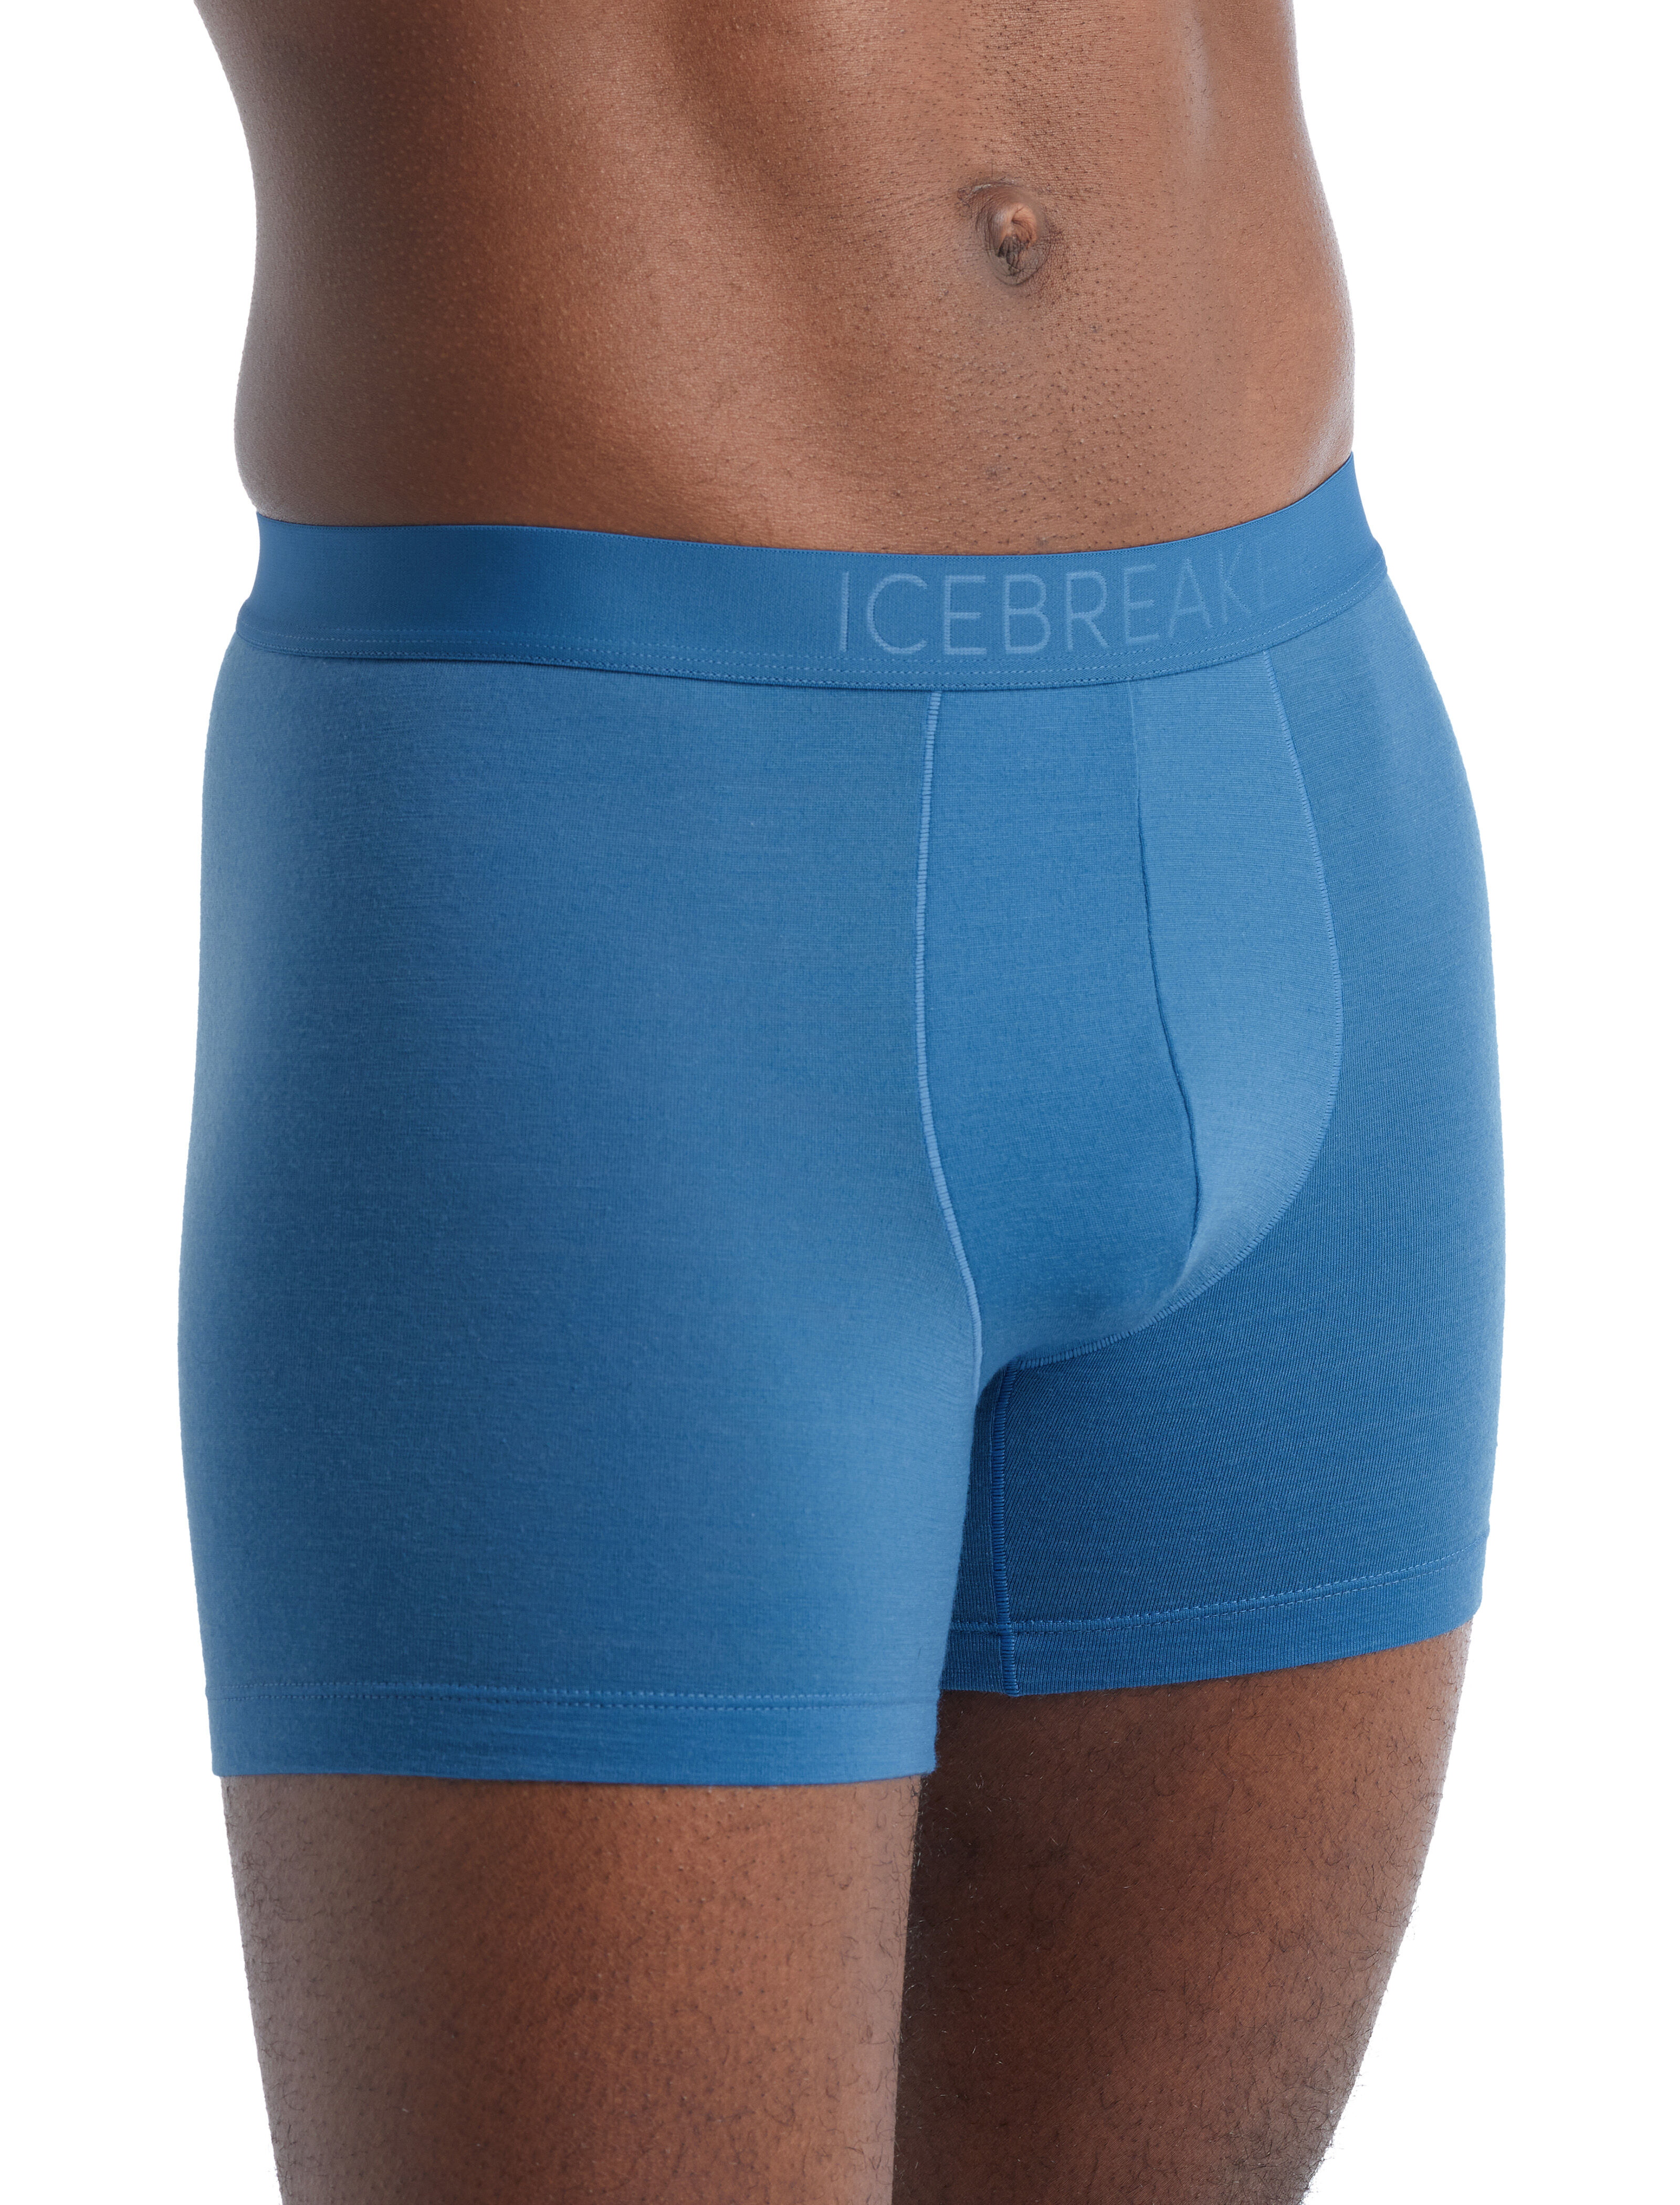 Icebreaker Mens Anatomica Boxers Underwear